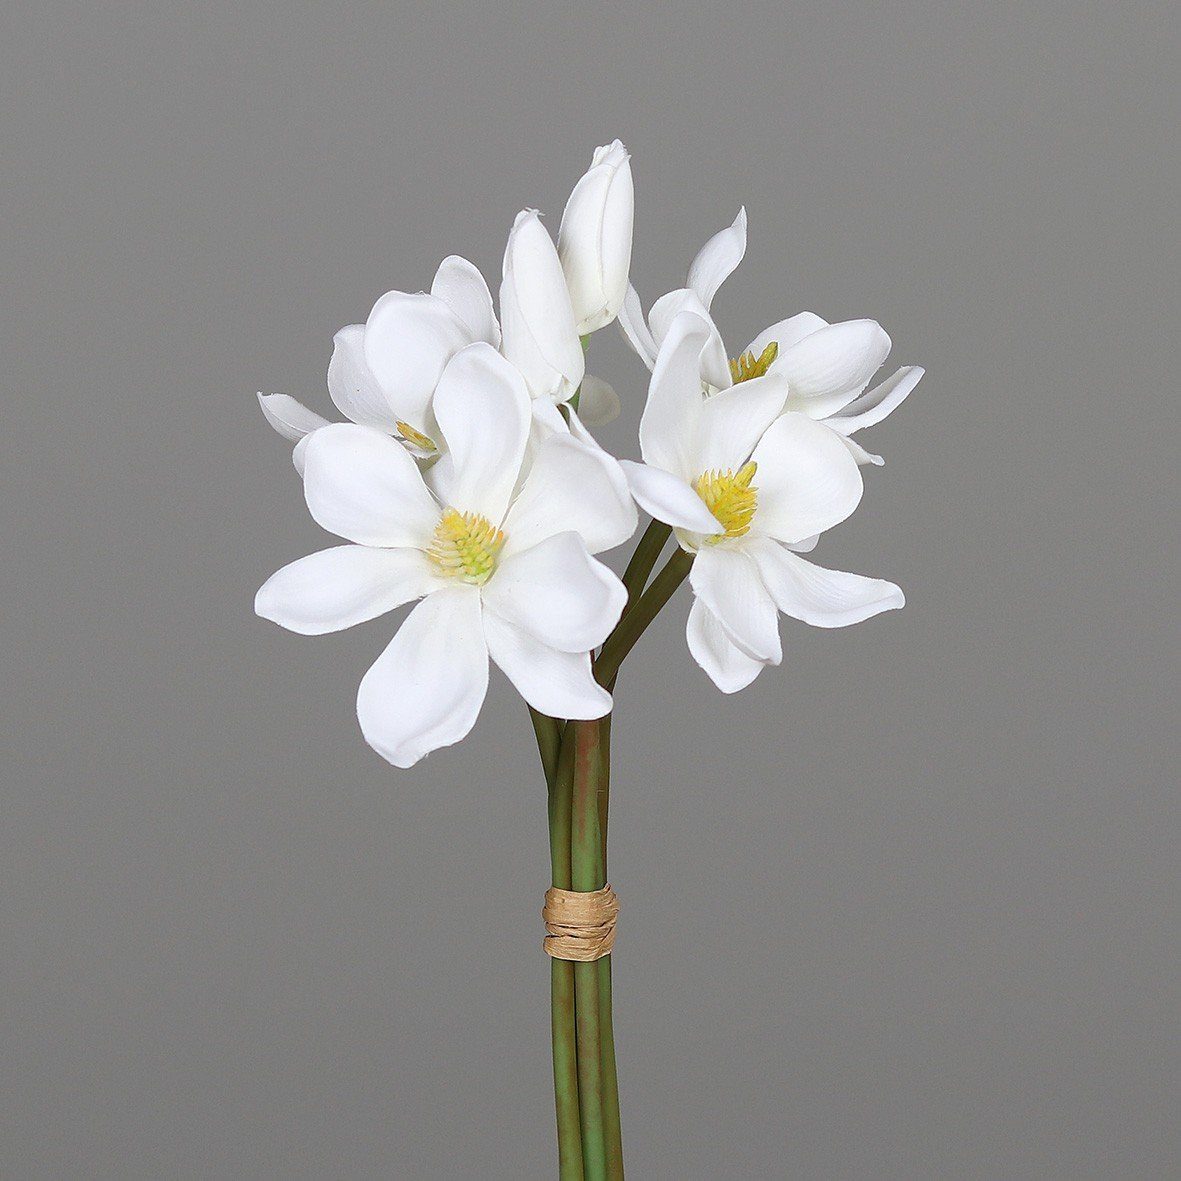 cm, Kunststoff B:14.5cm Höhe H:28cm DPI, Kunstpflanze, Weiß 28